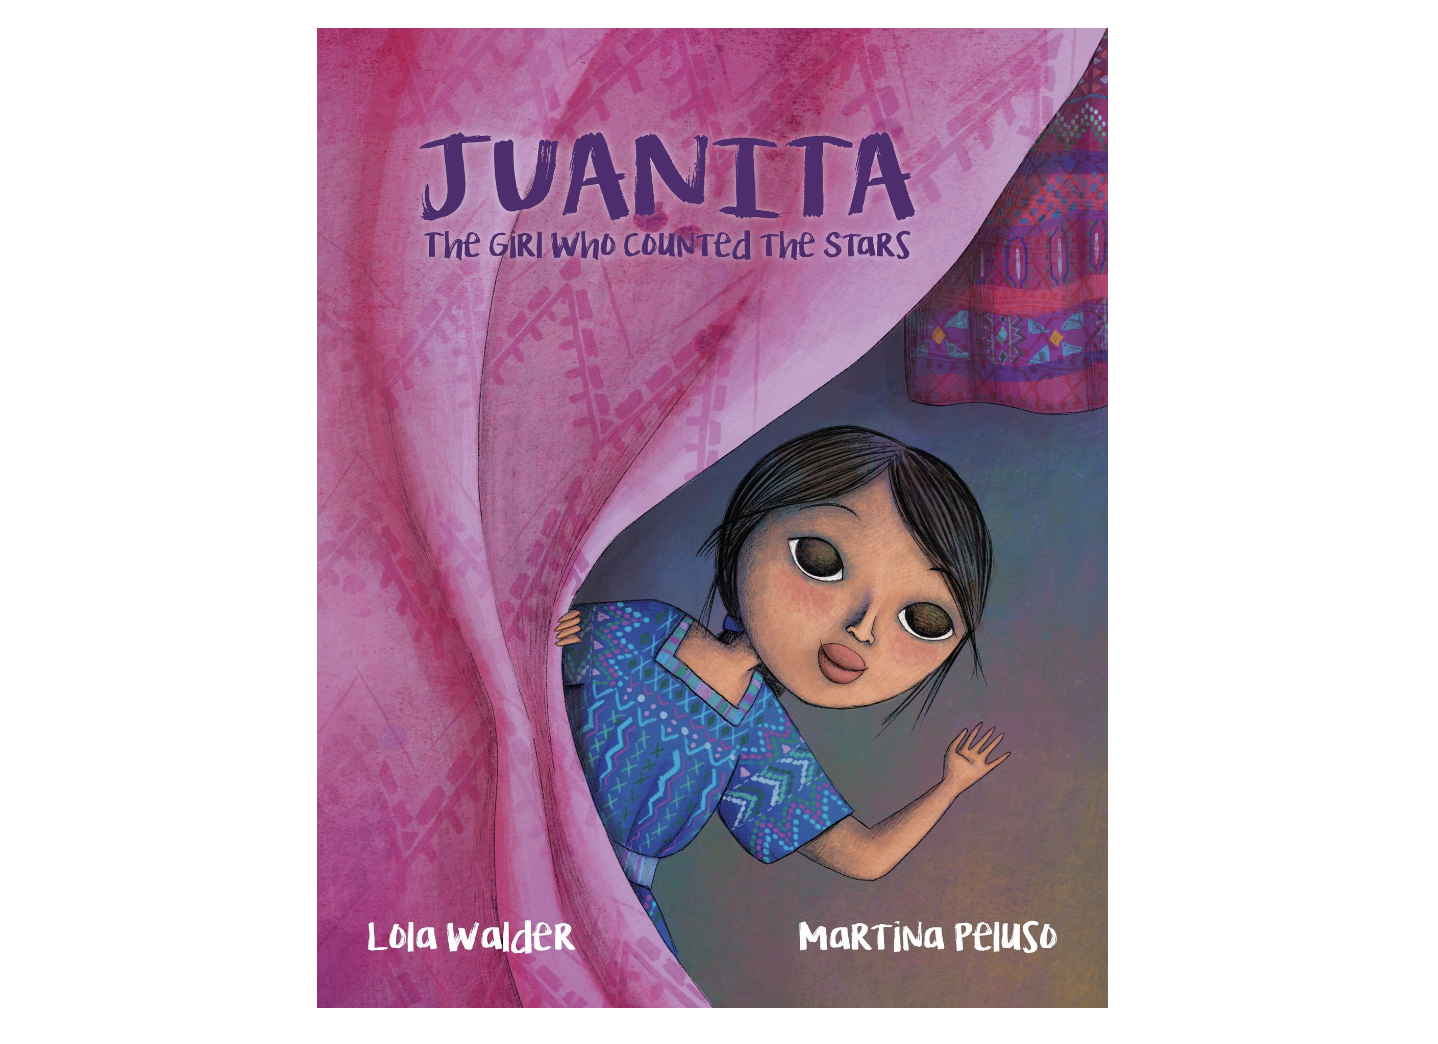 'Juanita: The Girl Who Counted the Stars' by Lola Walder and Martina Peluso